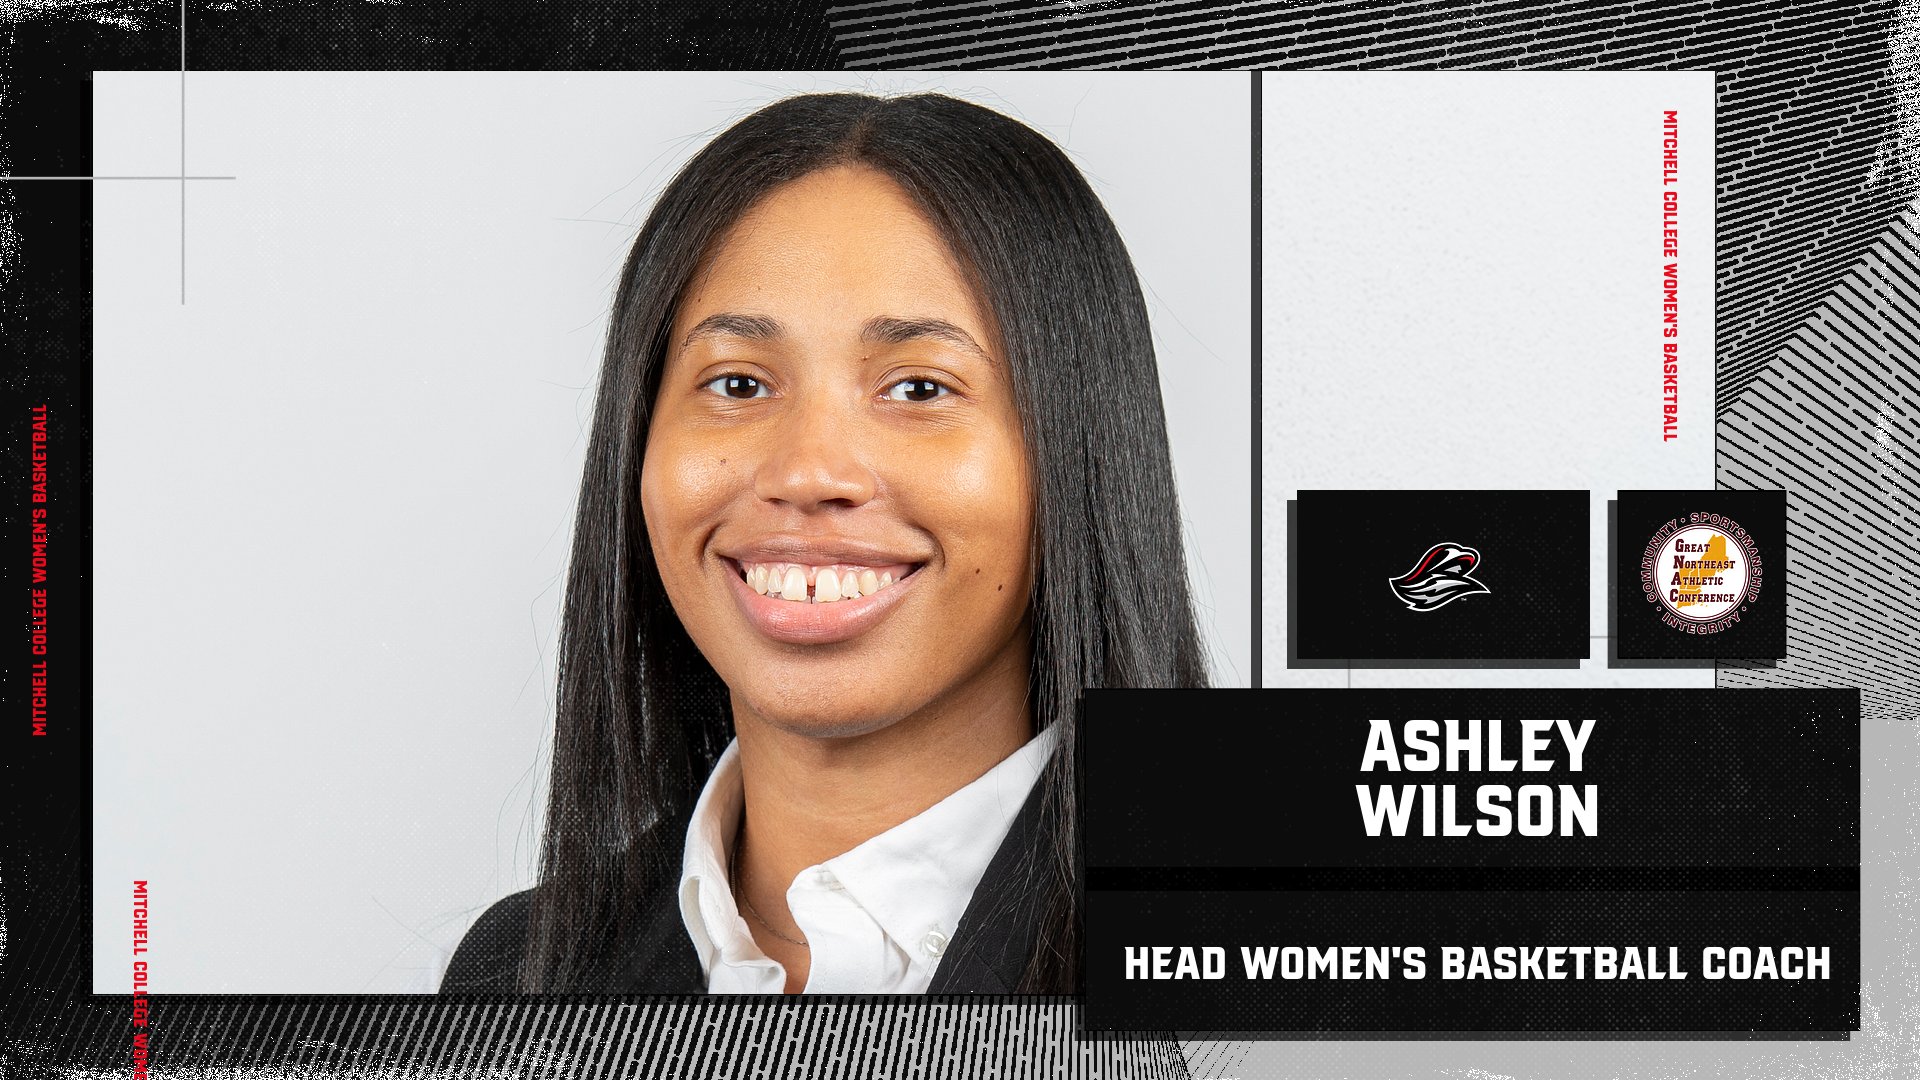 Ashley Wilson Named Head Women’s Basketball Coach